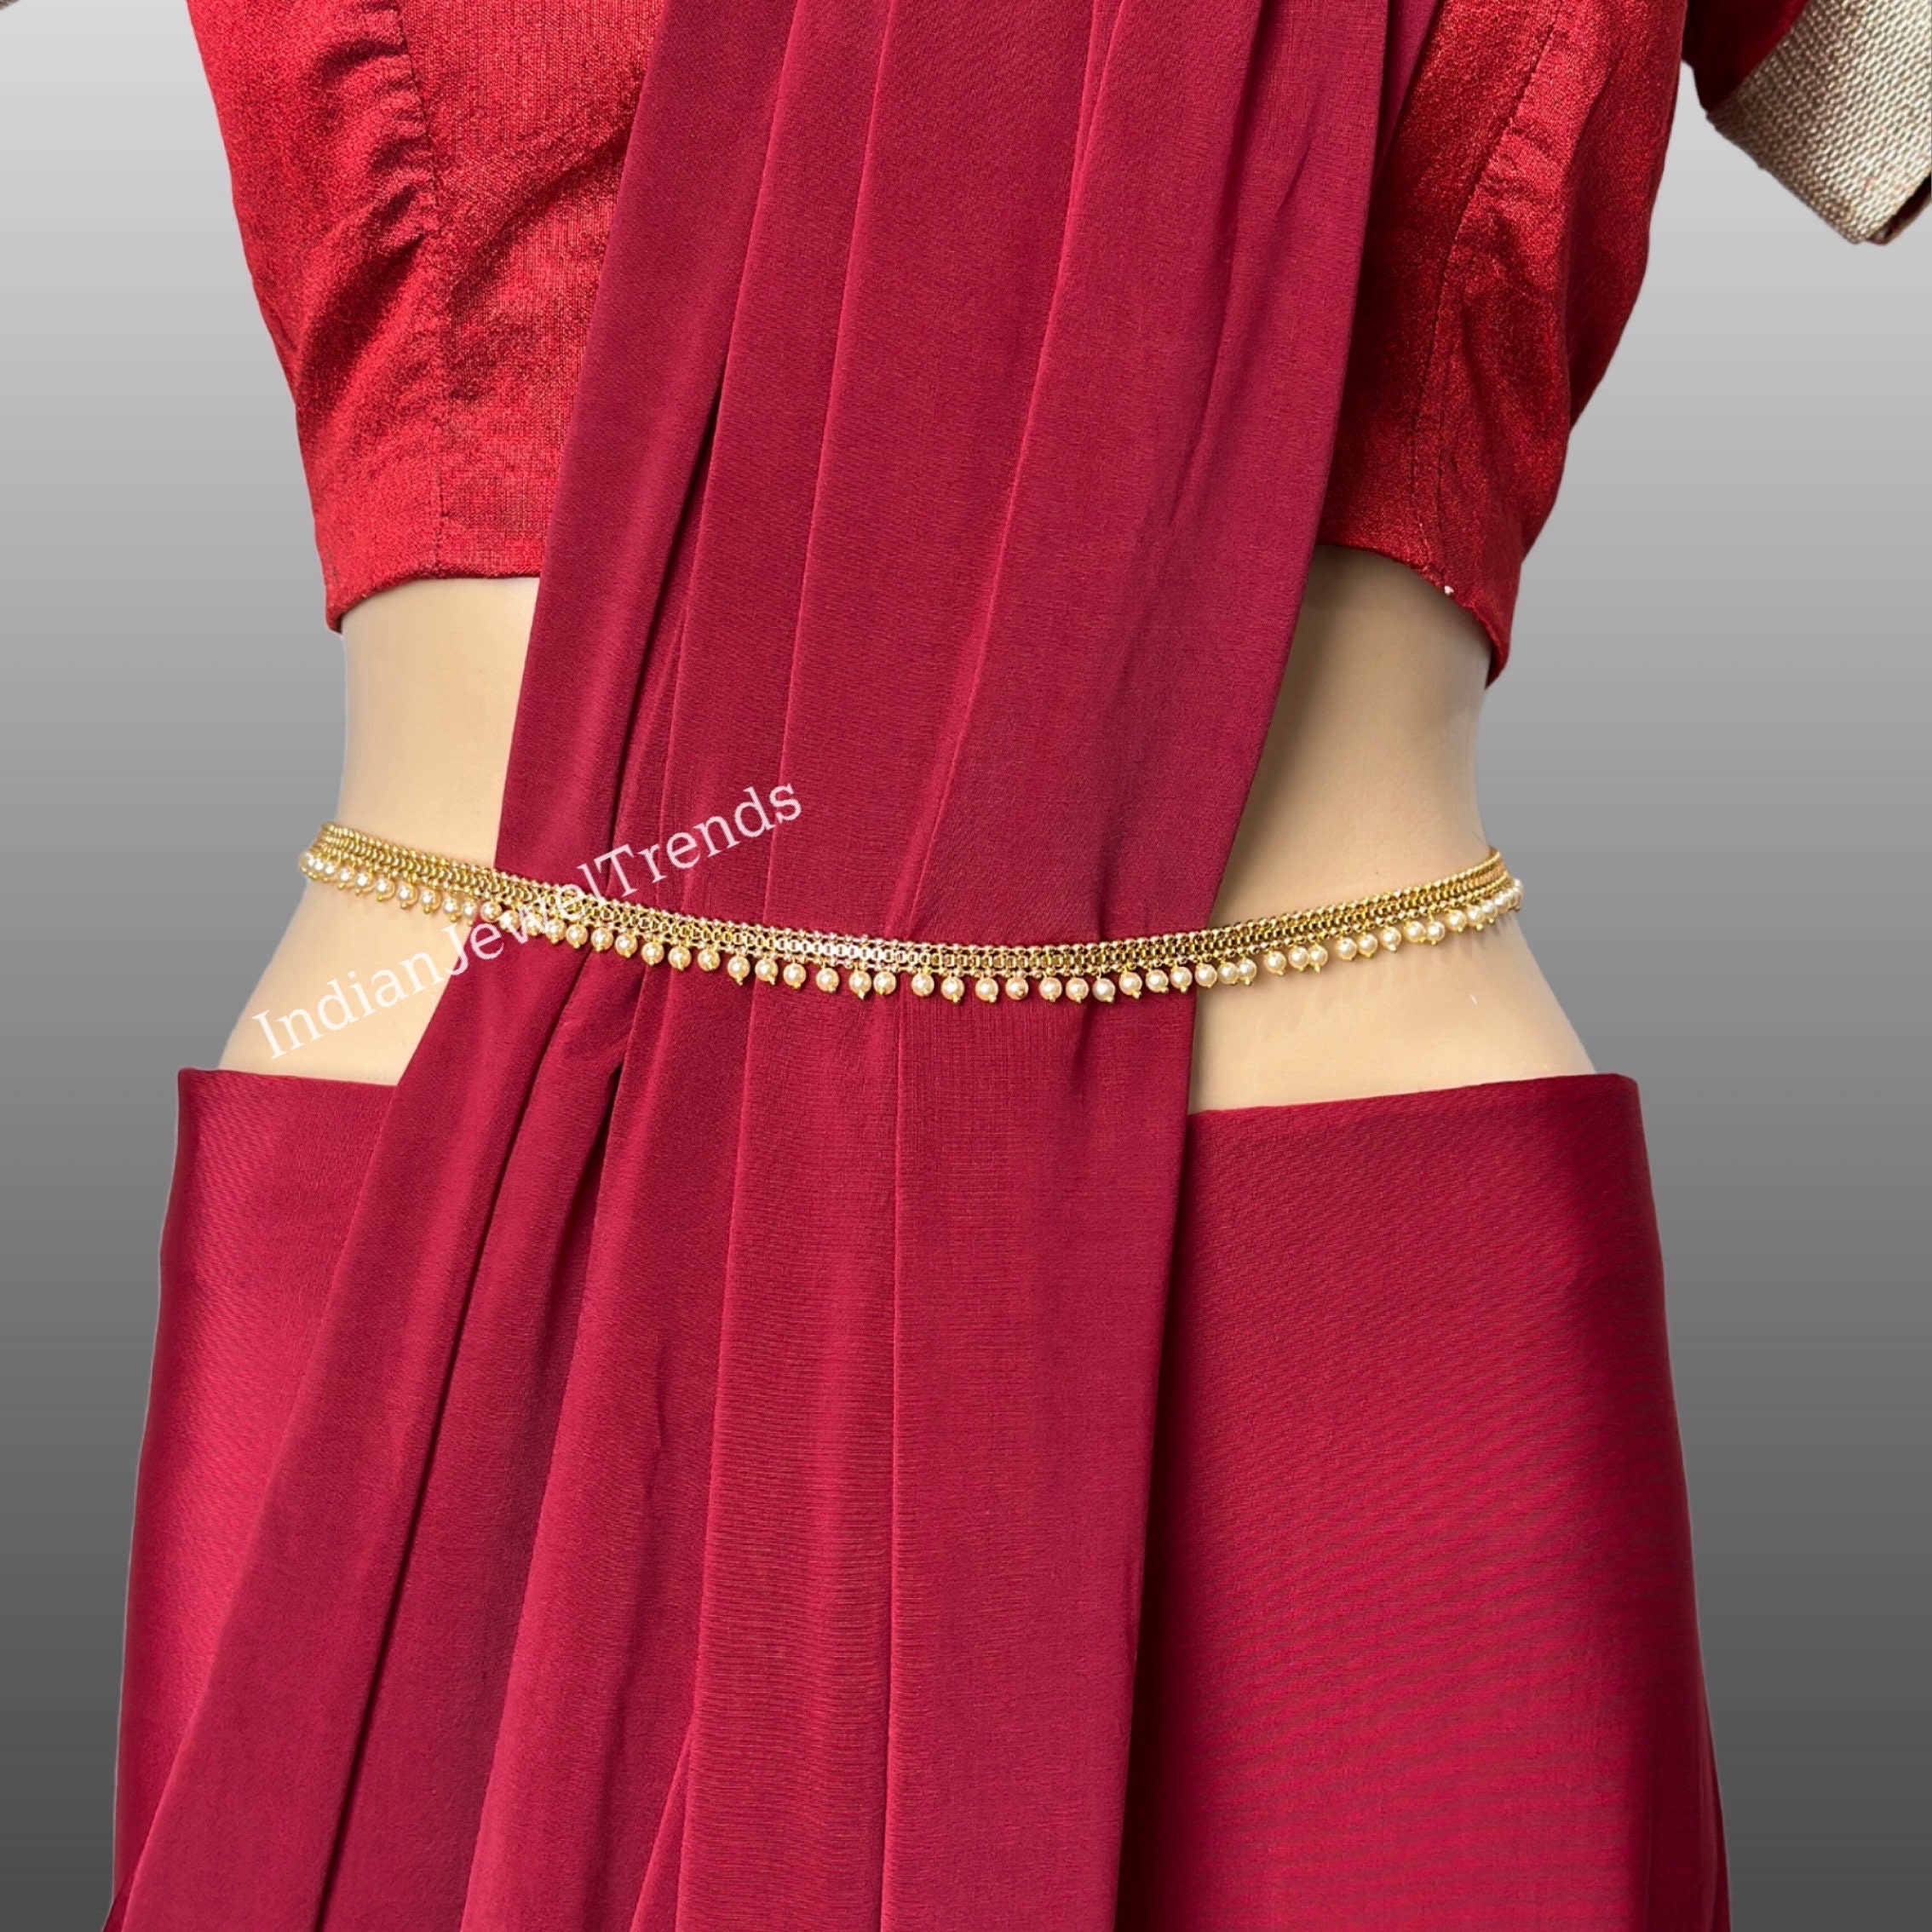 SAREE BELT Adult Size Lehanga Belt Kamarbandh Vadannam Hip Belt waist Belt  Maggam Work Indian Ethnic Wedding Saree gold/pink 